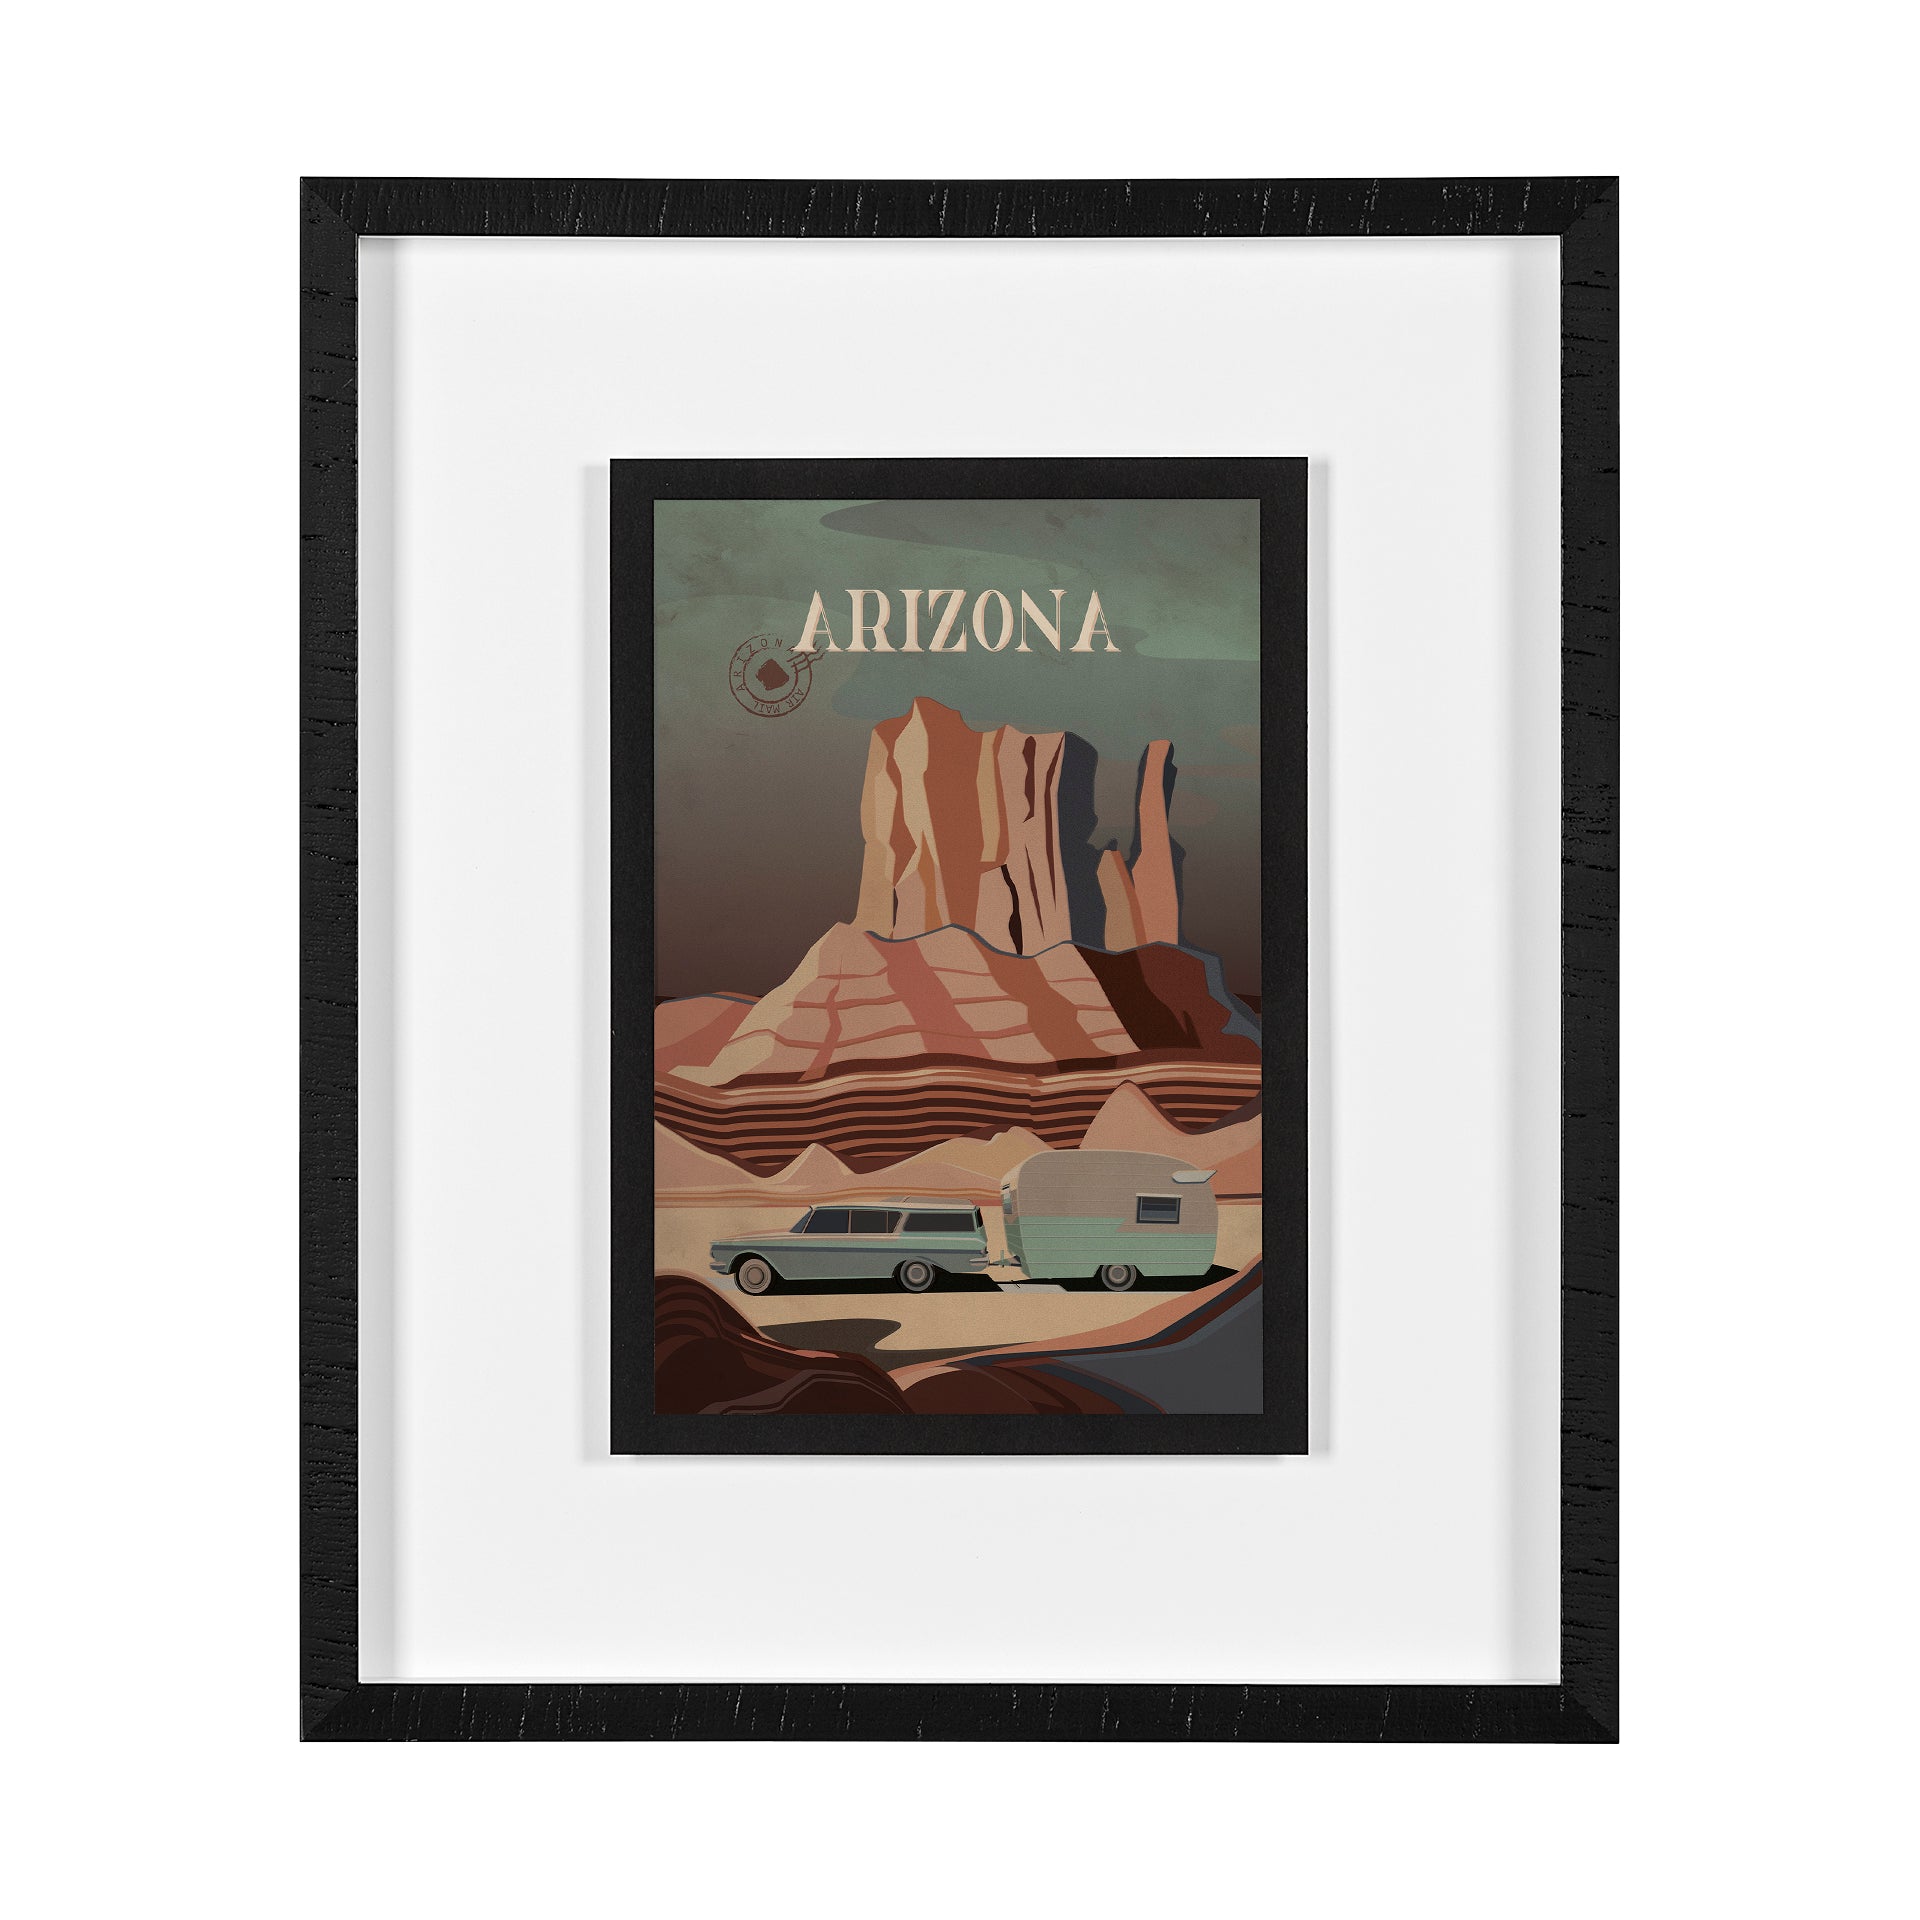 Arizona Go Framed Art